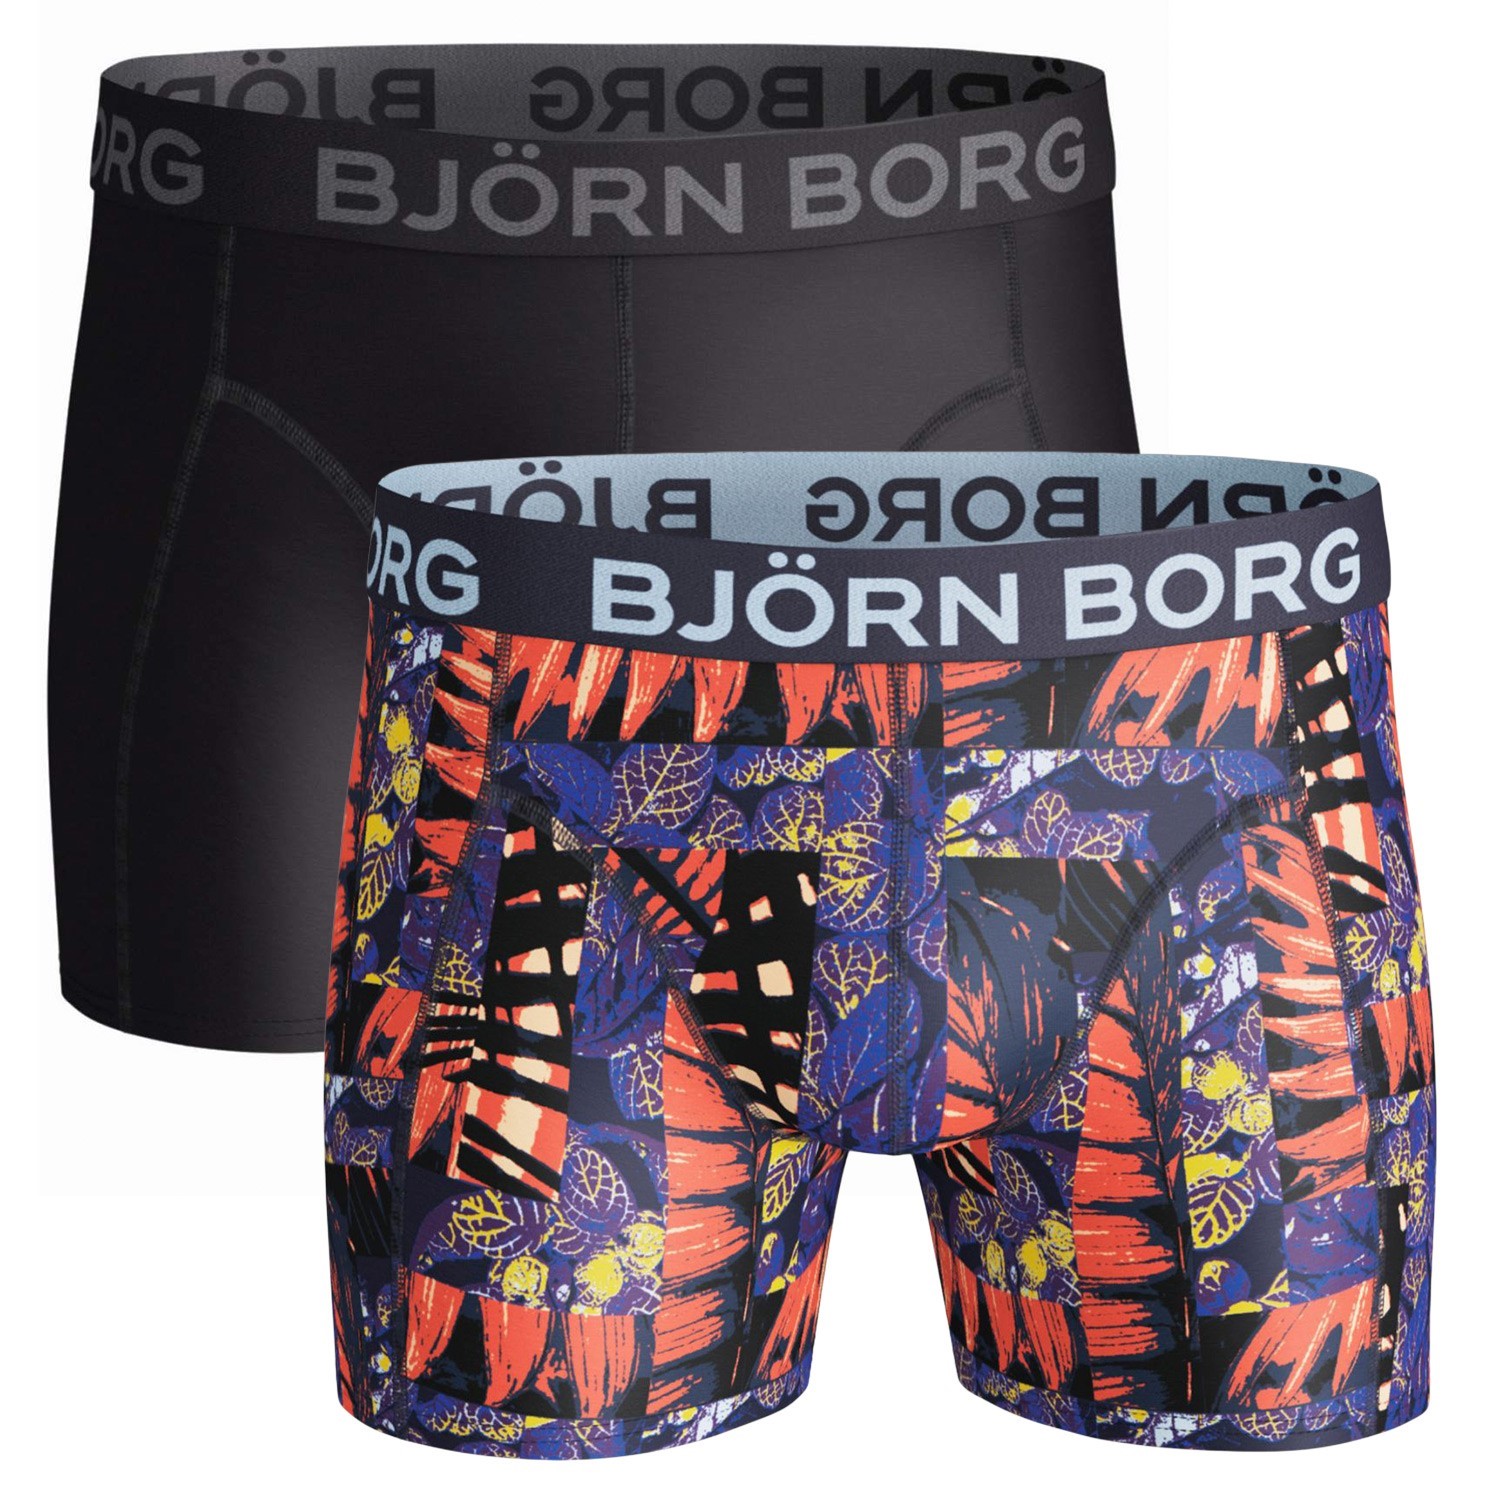 maak een foto Hoofd Binnen Bjorn Borg Microfiber Shorts Hot Sale - www.pugliablu.com 1691359441